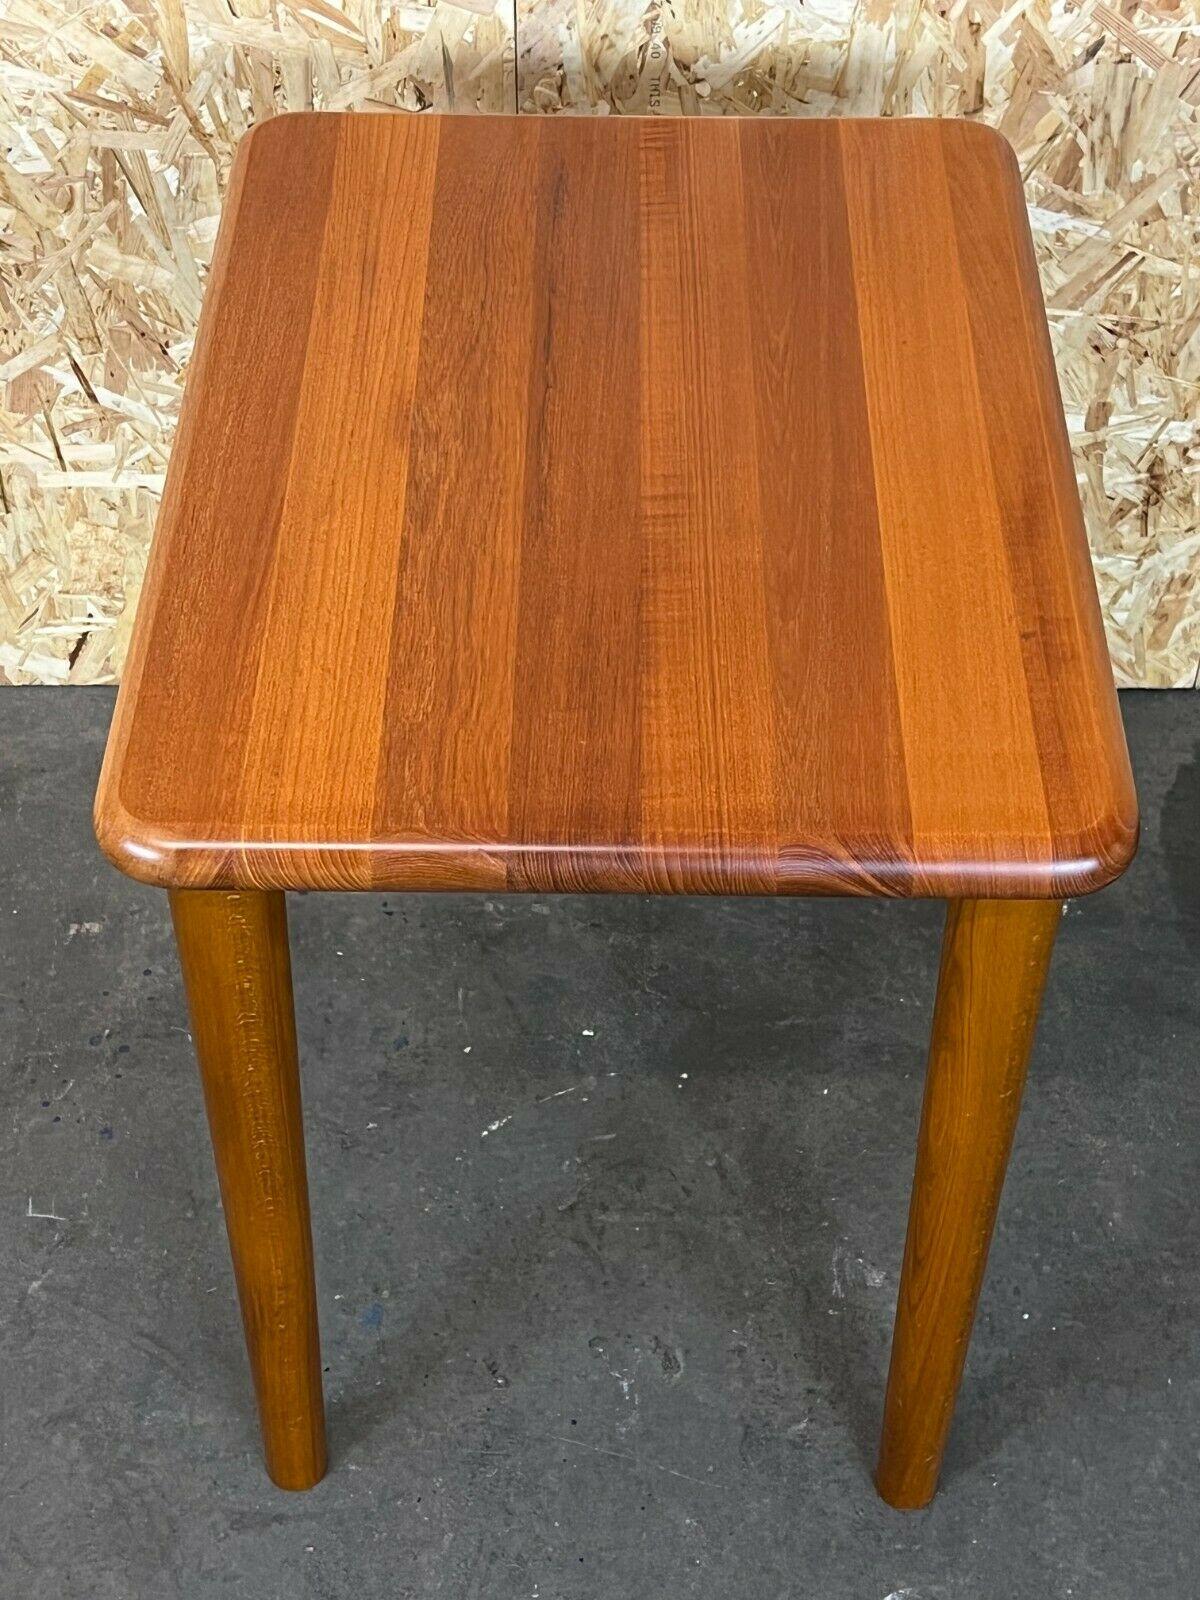 70s Teak Side Table Glostrup Danish Design Denmark Mid Century For Sale 4